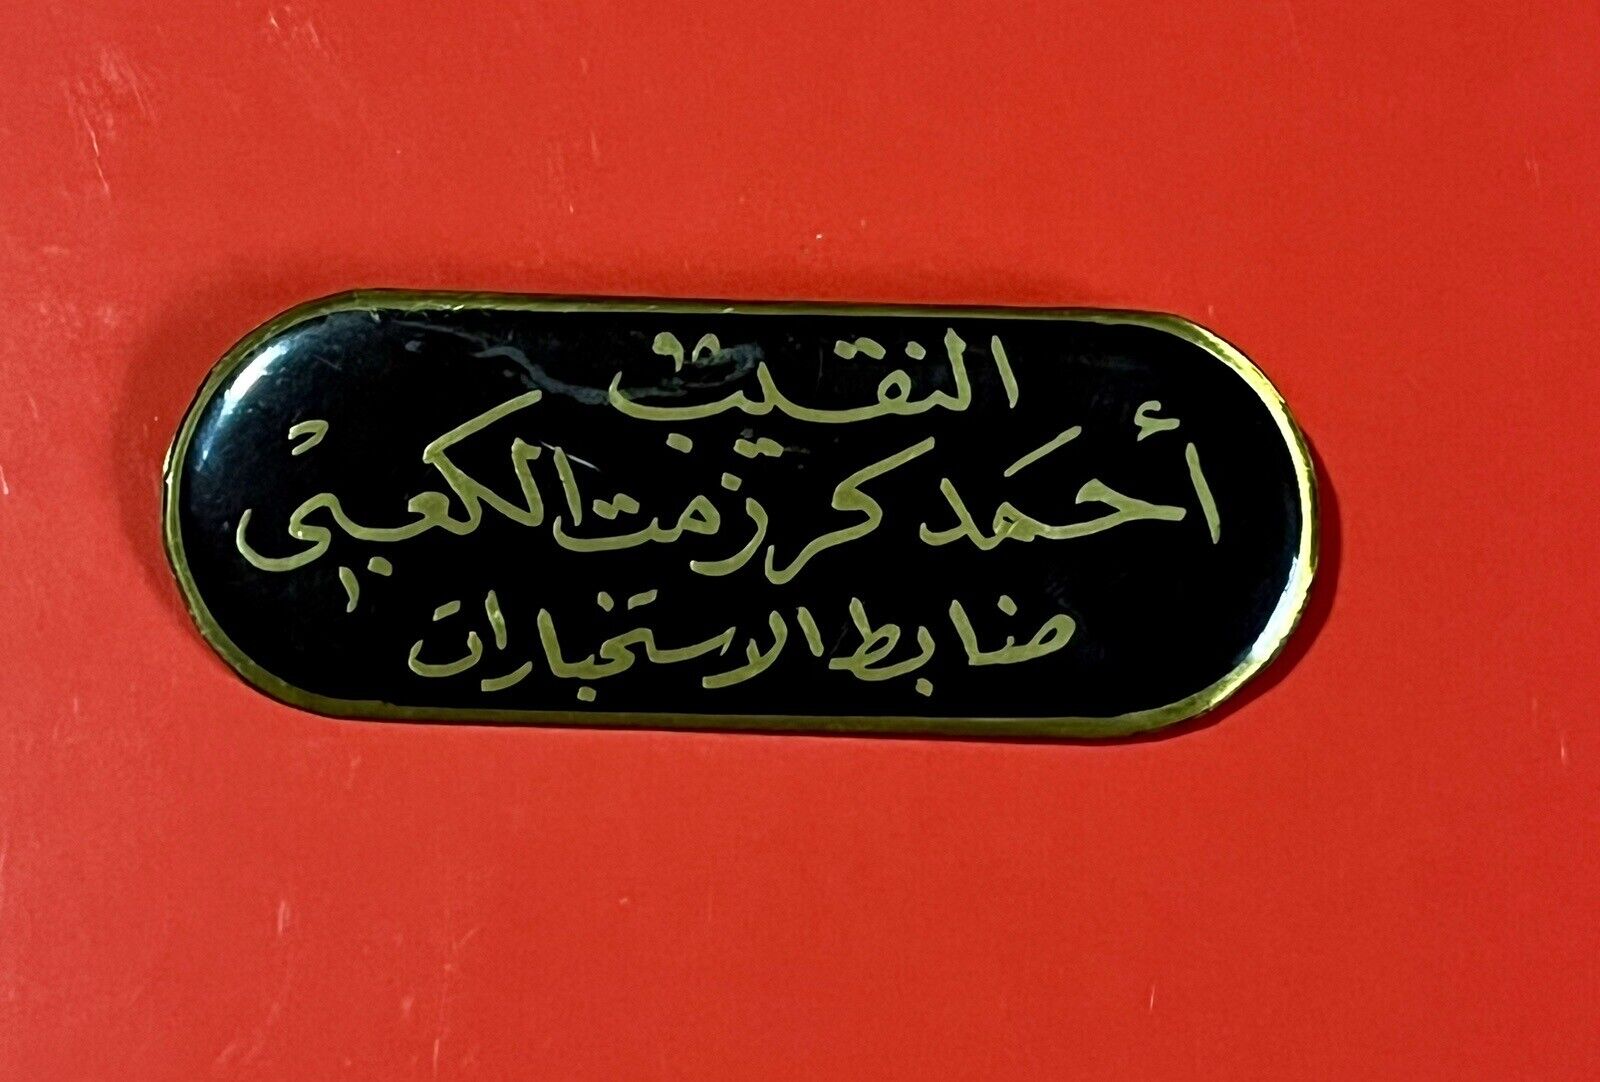 Iraq-Vintage Iraqi intelligence officer name tag ( Captain ), Saddam Era 1990’s